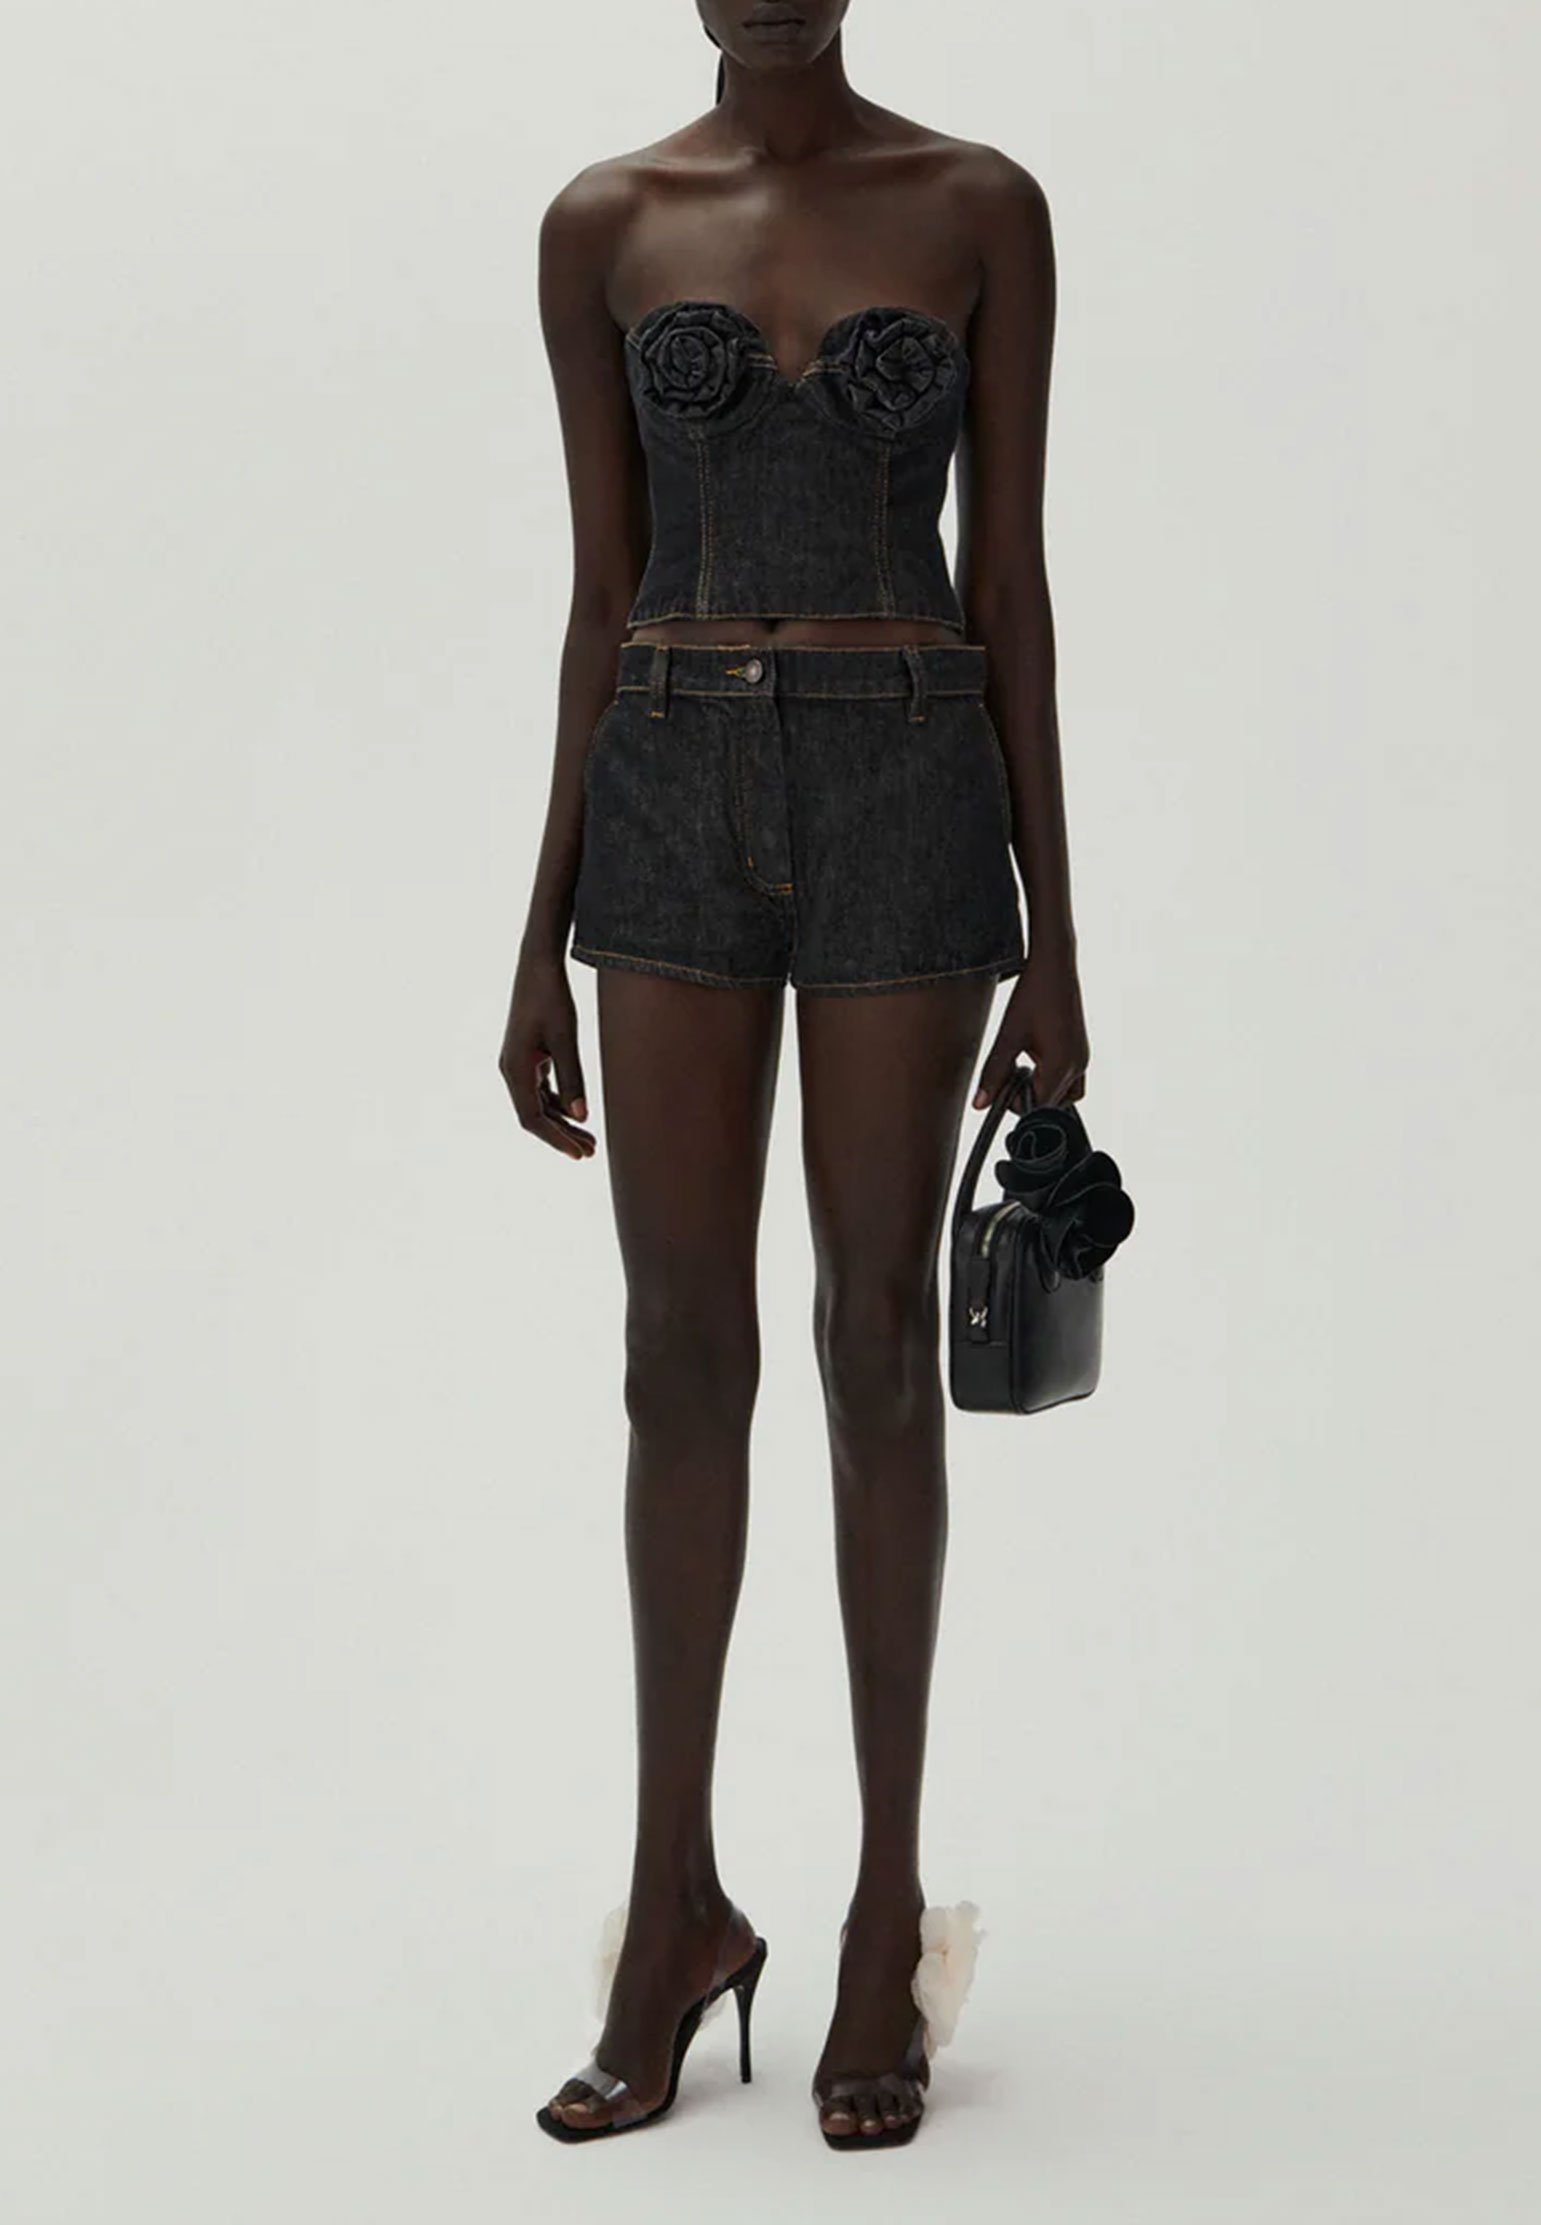 Shorts MAGDA BUTRYM Color: black (Code: 3605) in online store Allure